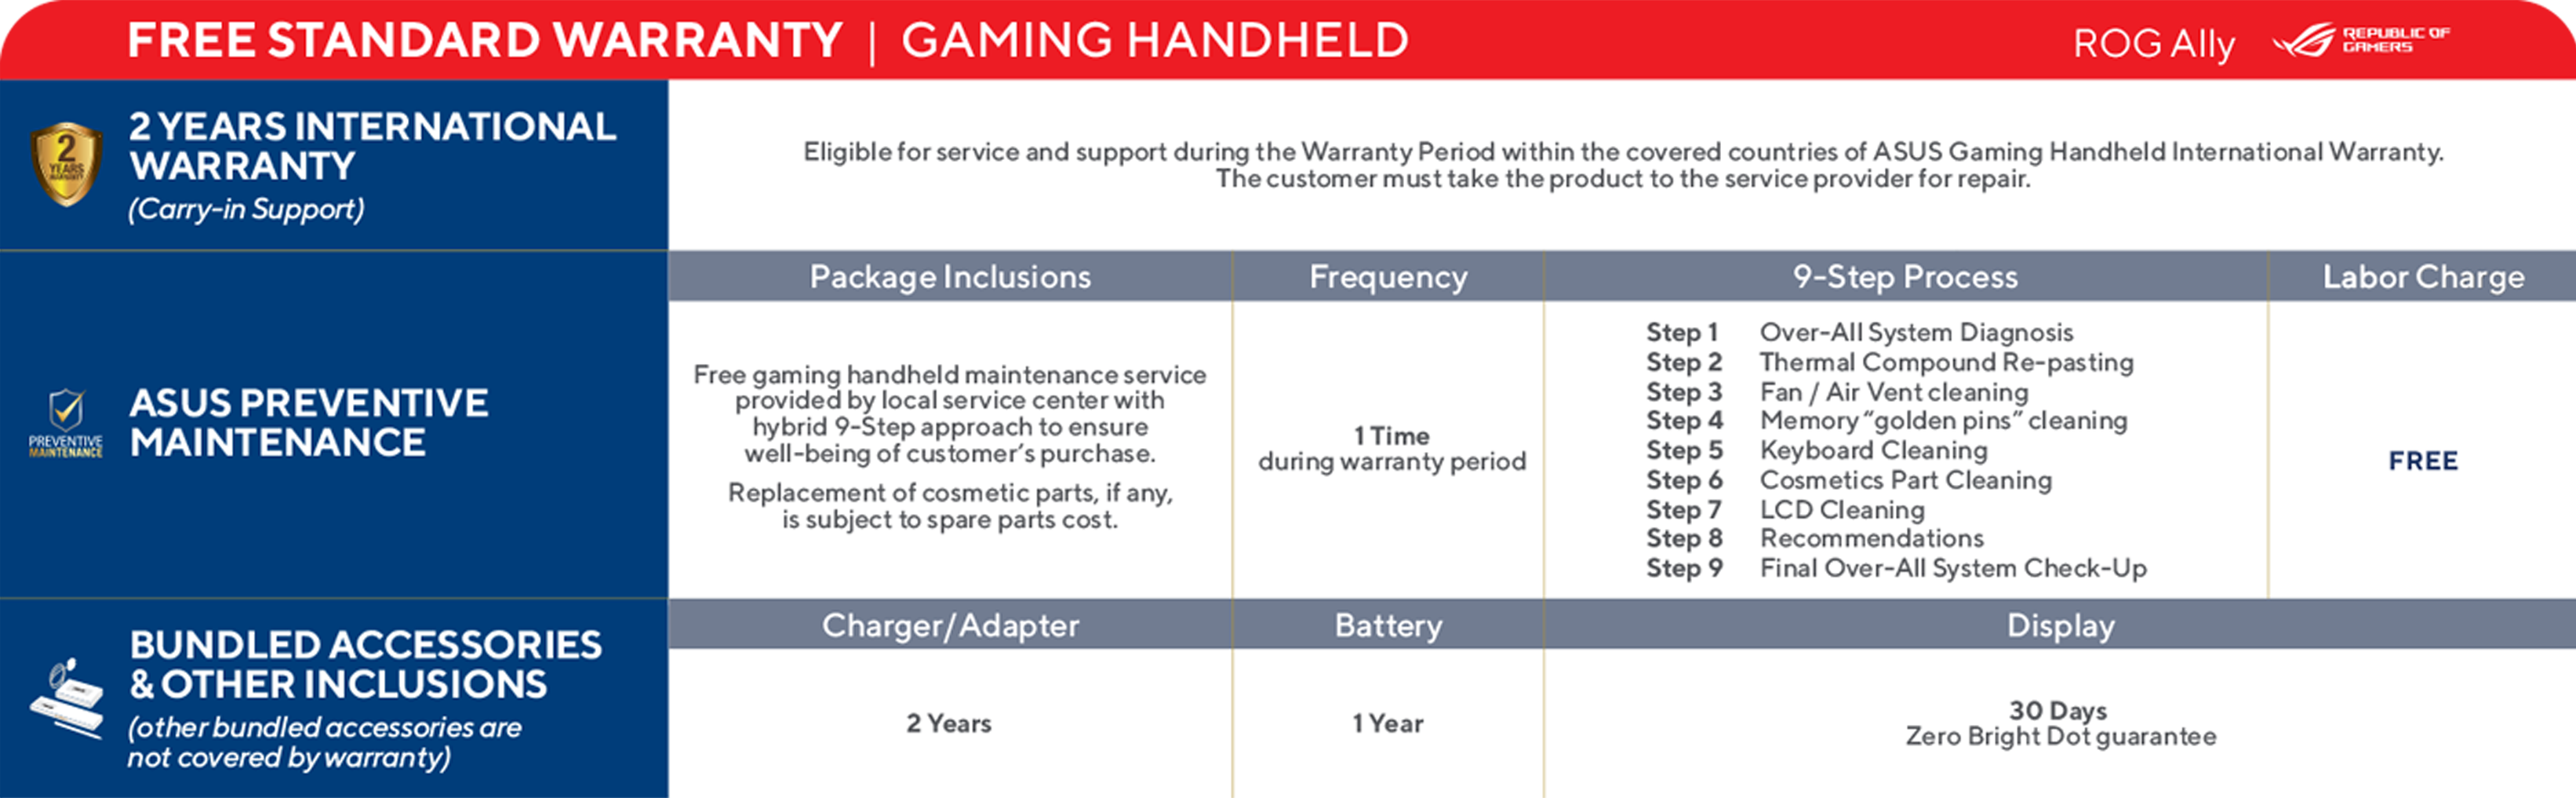 Free Standard Warranty | Gaming Handheld